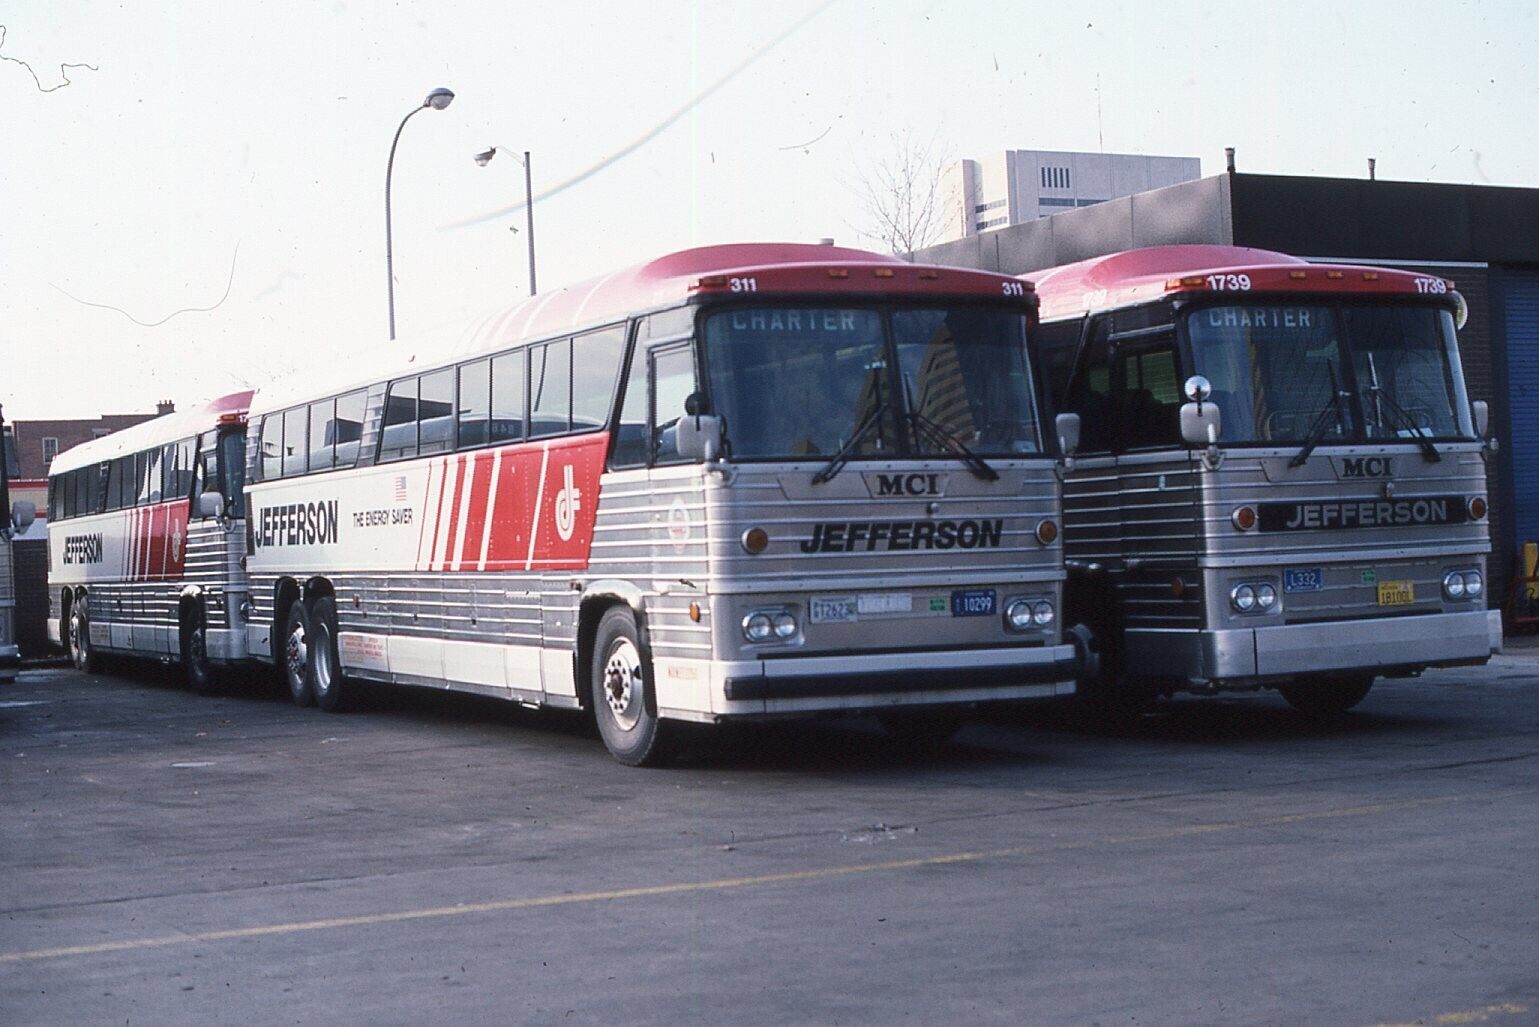 Original Bus Slide Jefferson Charter #311 & 1739 MCI bus 1986 #23